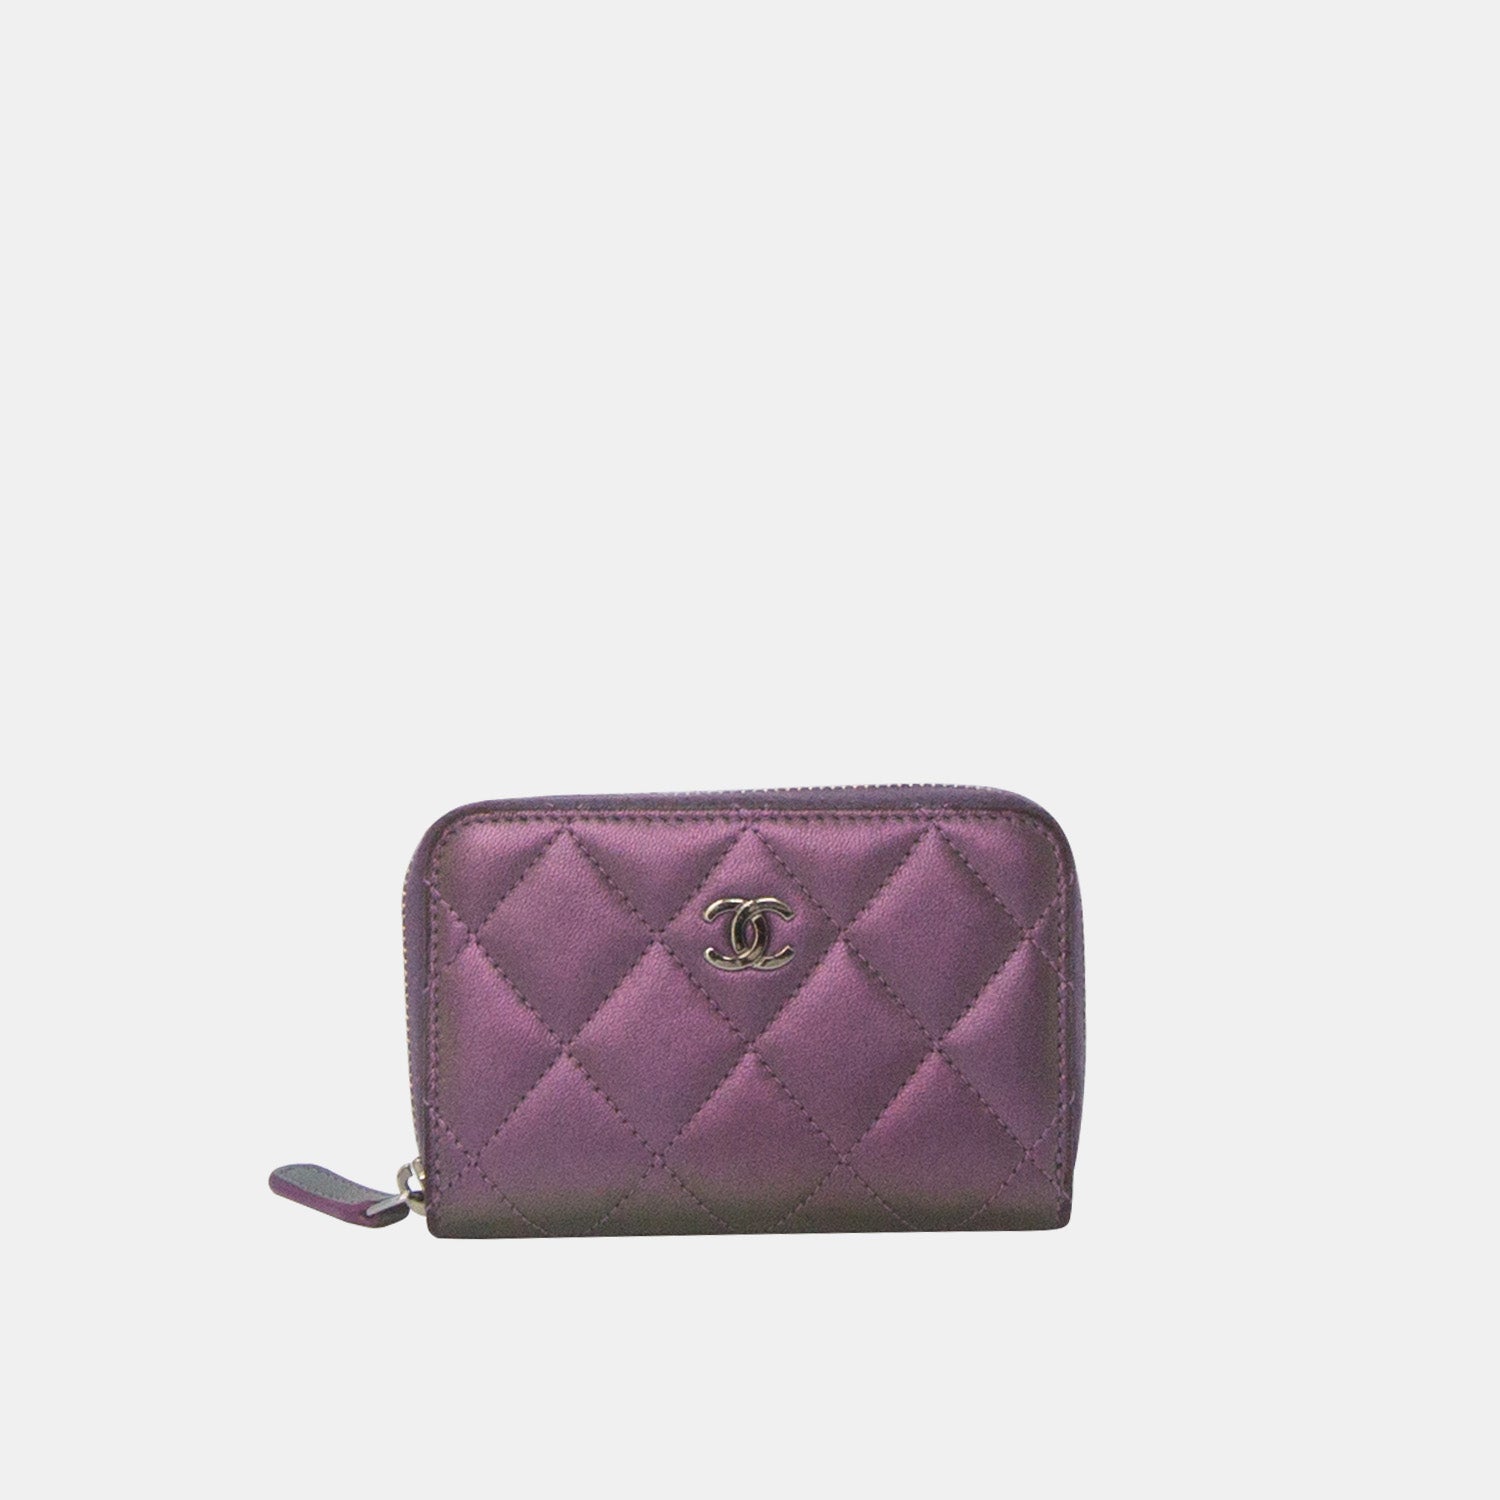 Chanel Metallic Purple Lambskin Zip Around Coin Purse Wallet